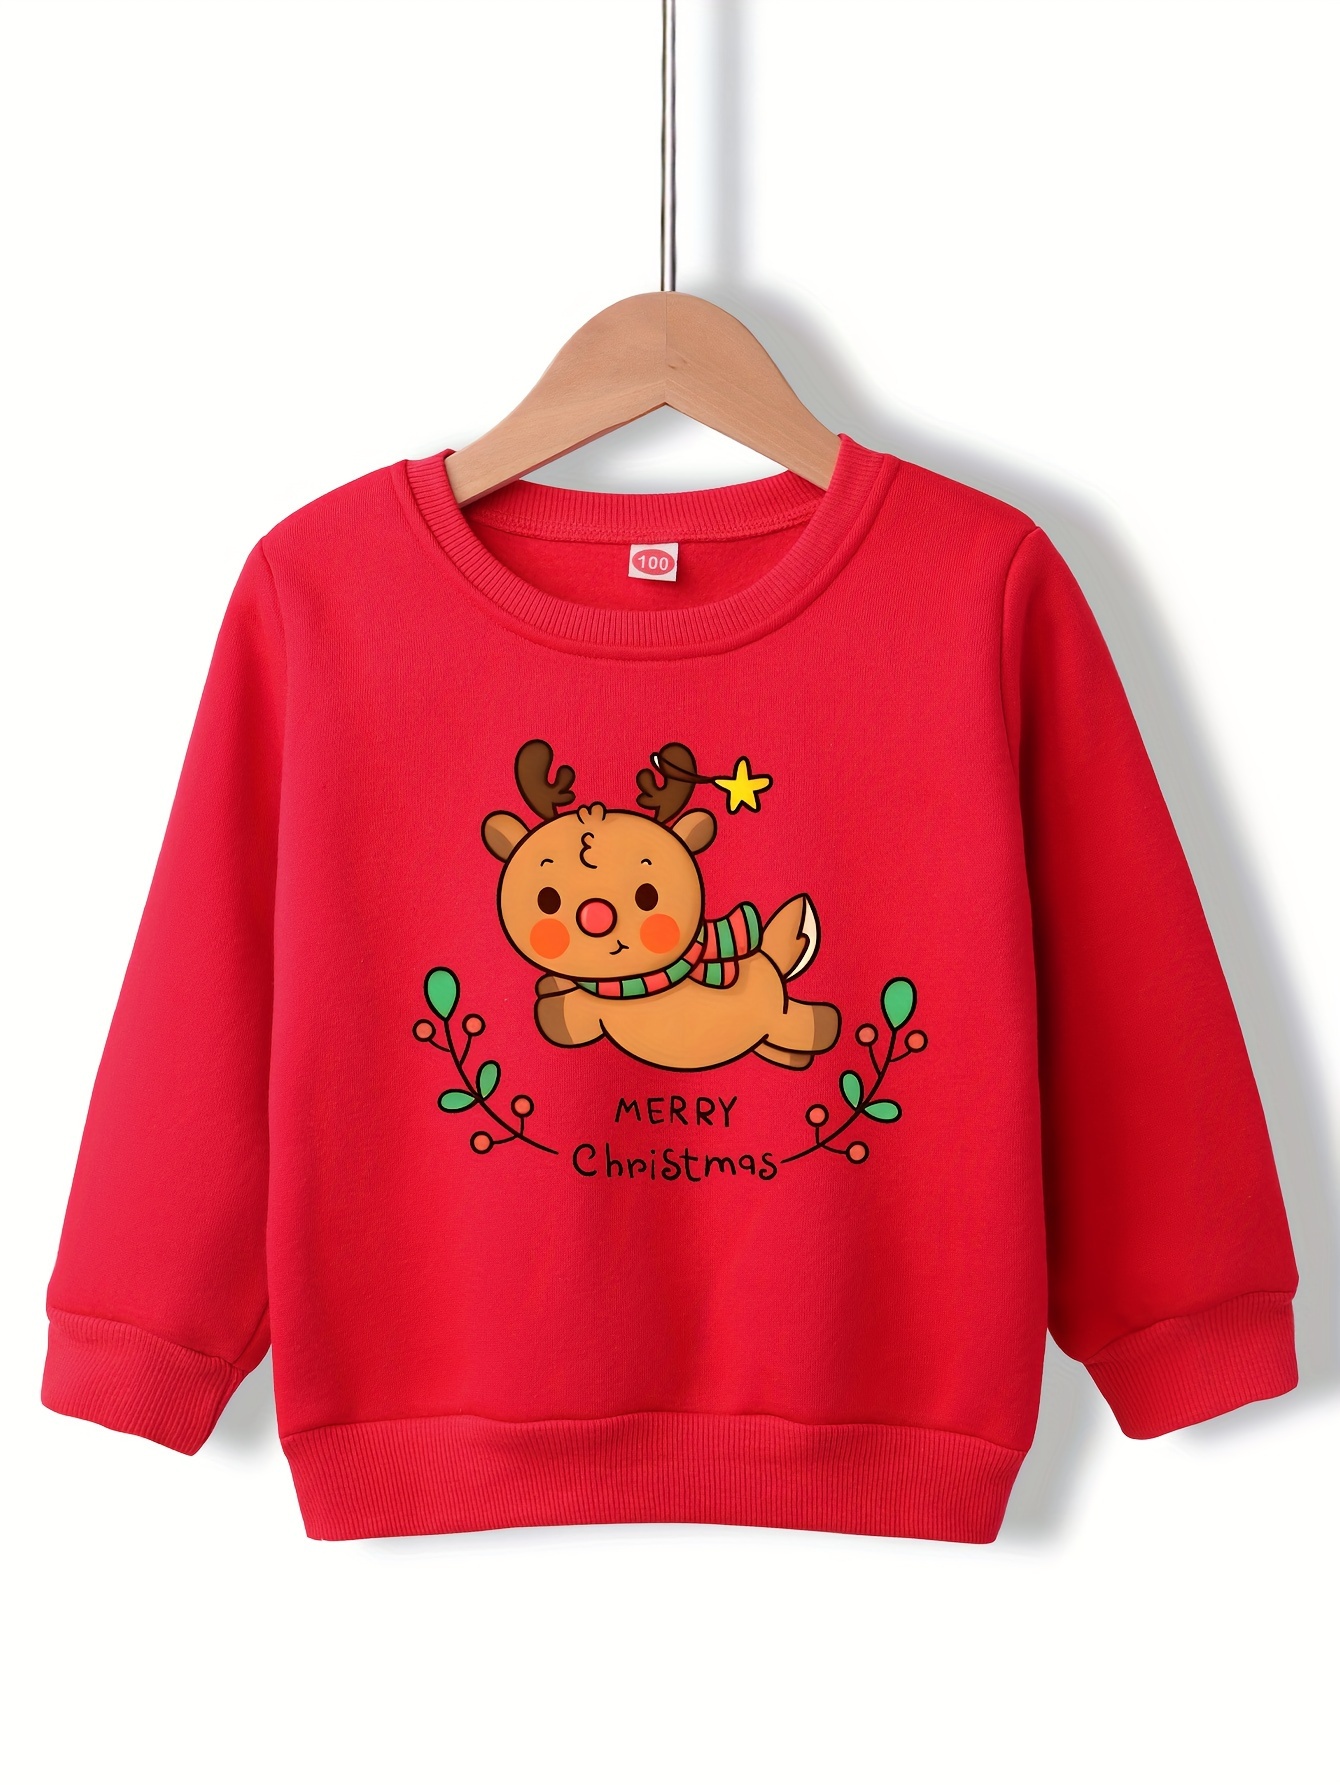 Boys Long Sleeve Reindeer Fairisle Sweater - Holiday Express